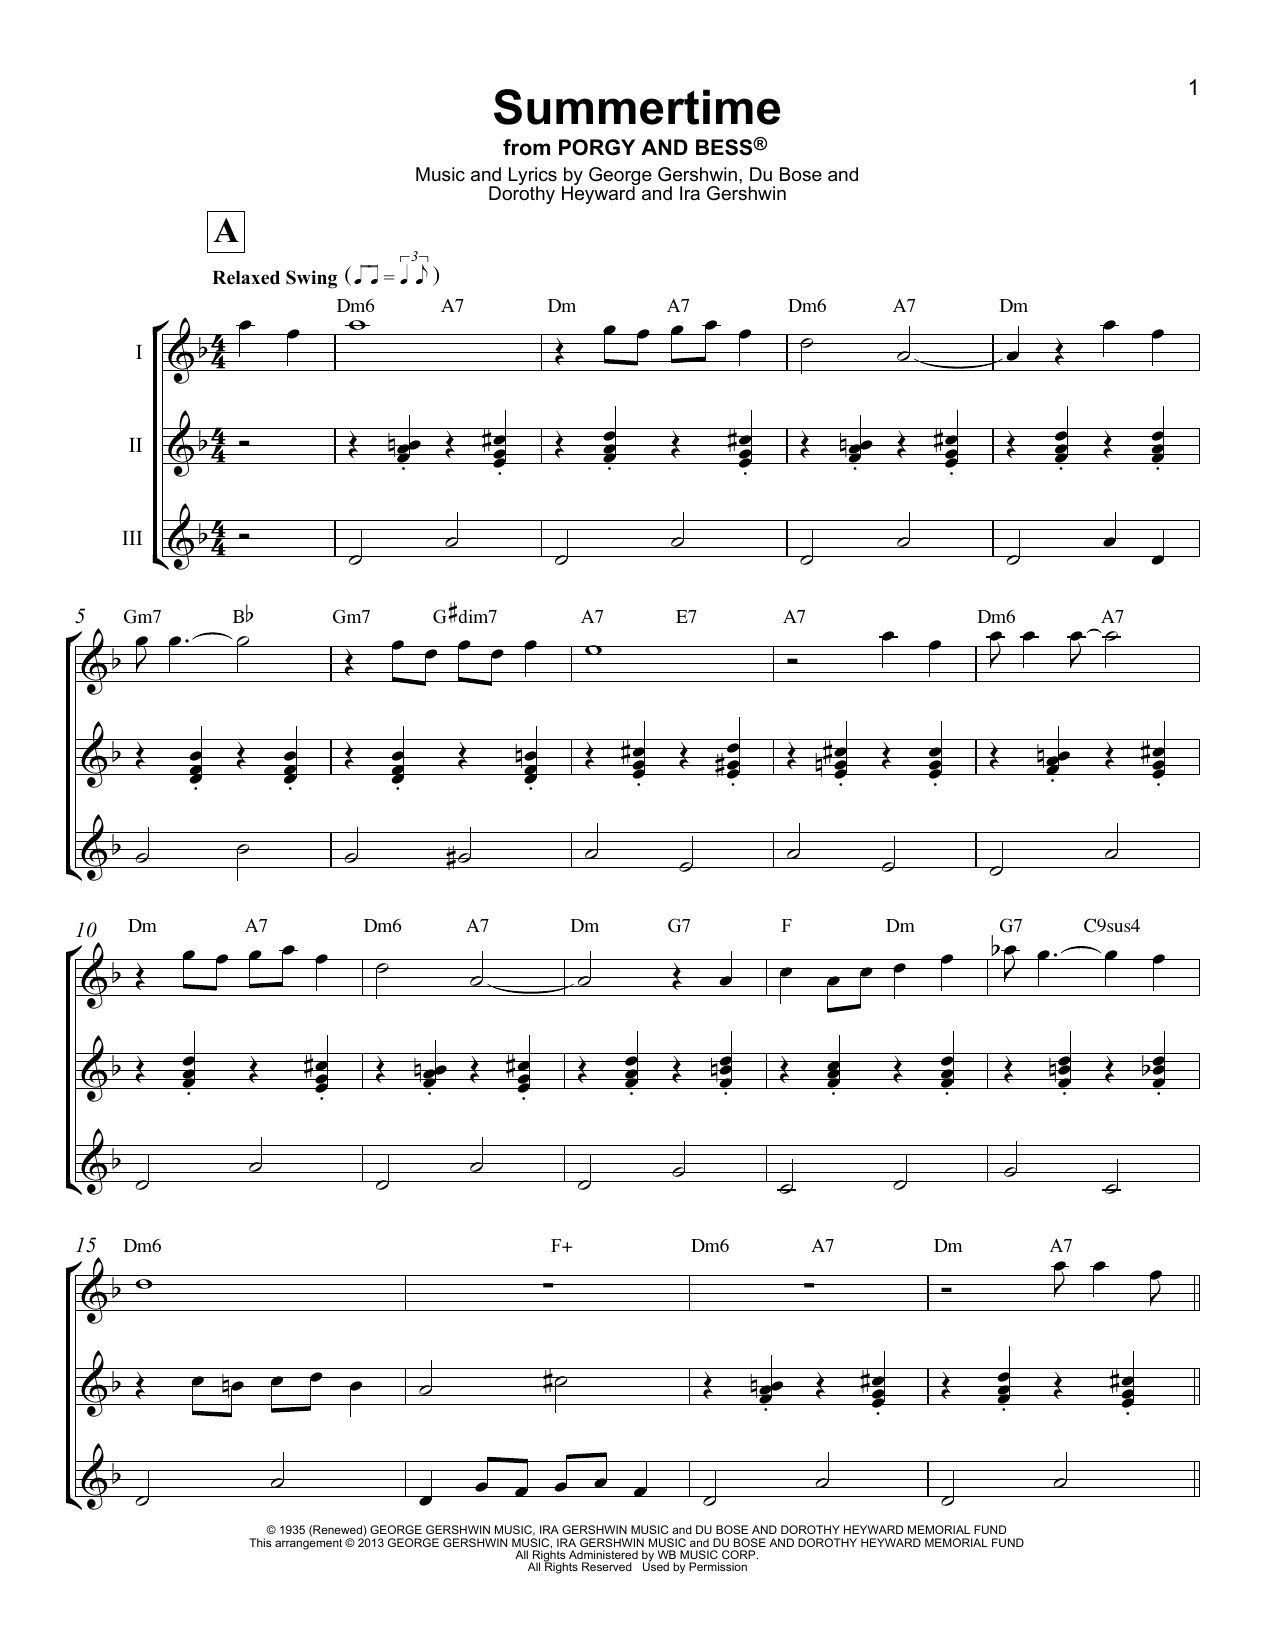 George Gershwin Summertime Sheet Music Notes & Chords for Banjo - Download or Print PDF